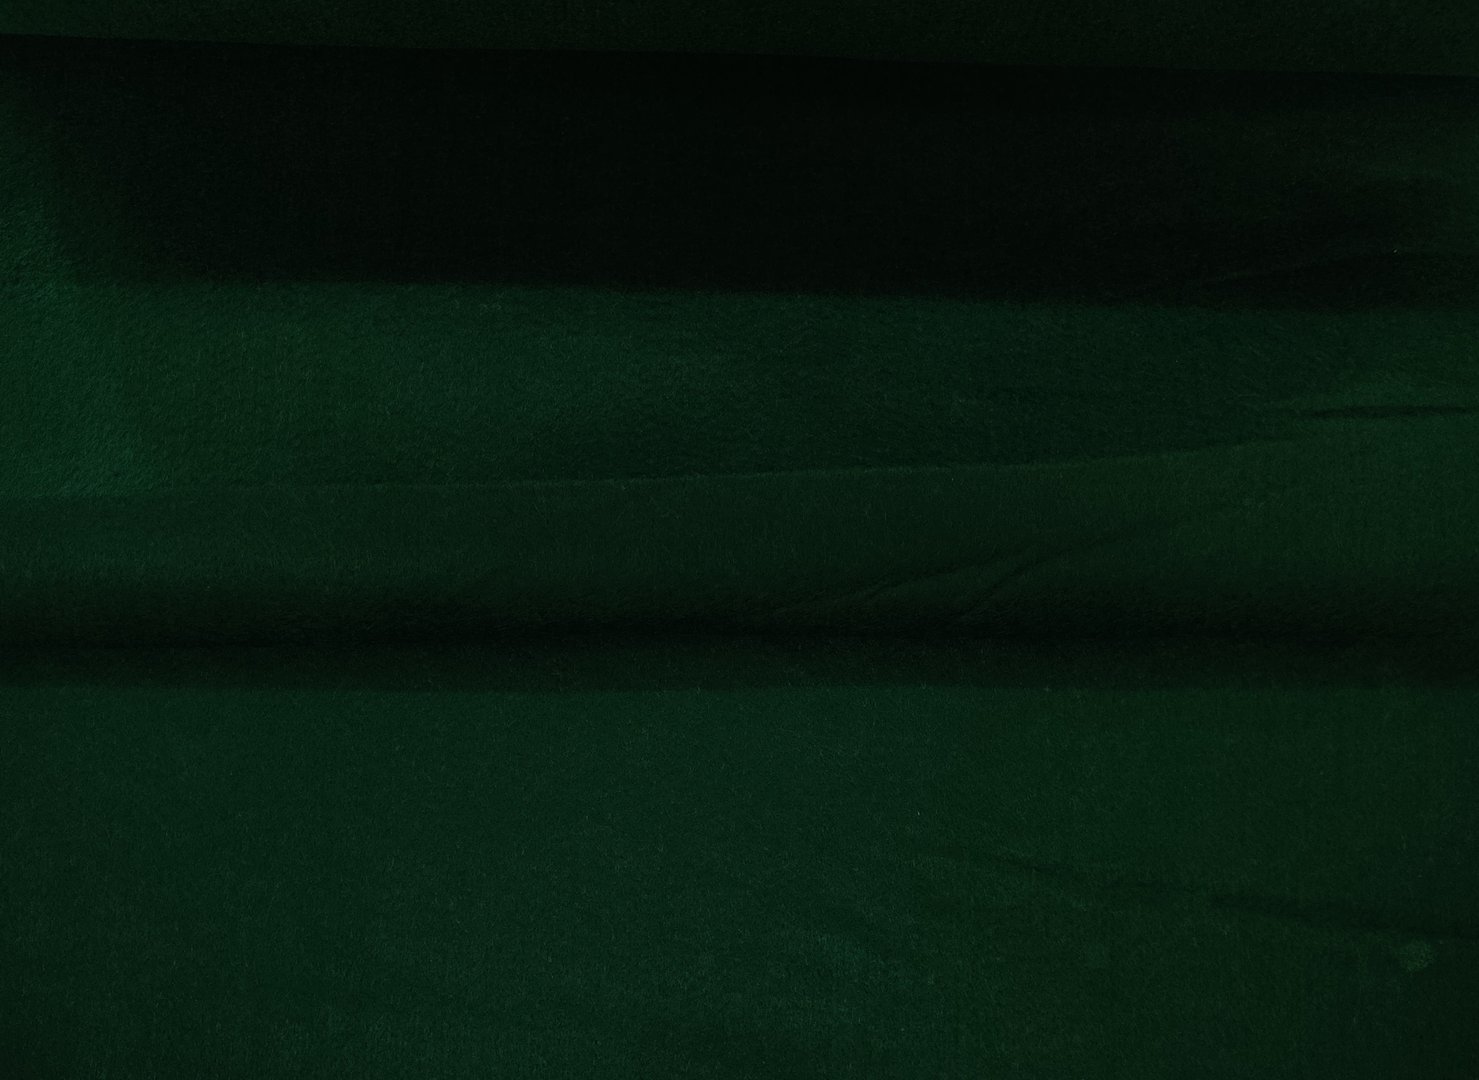 Thin green felt fabric for crafting